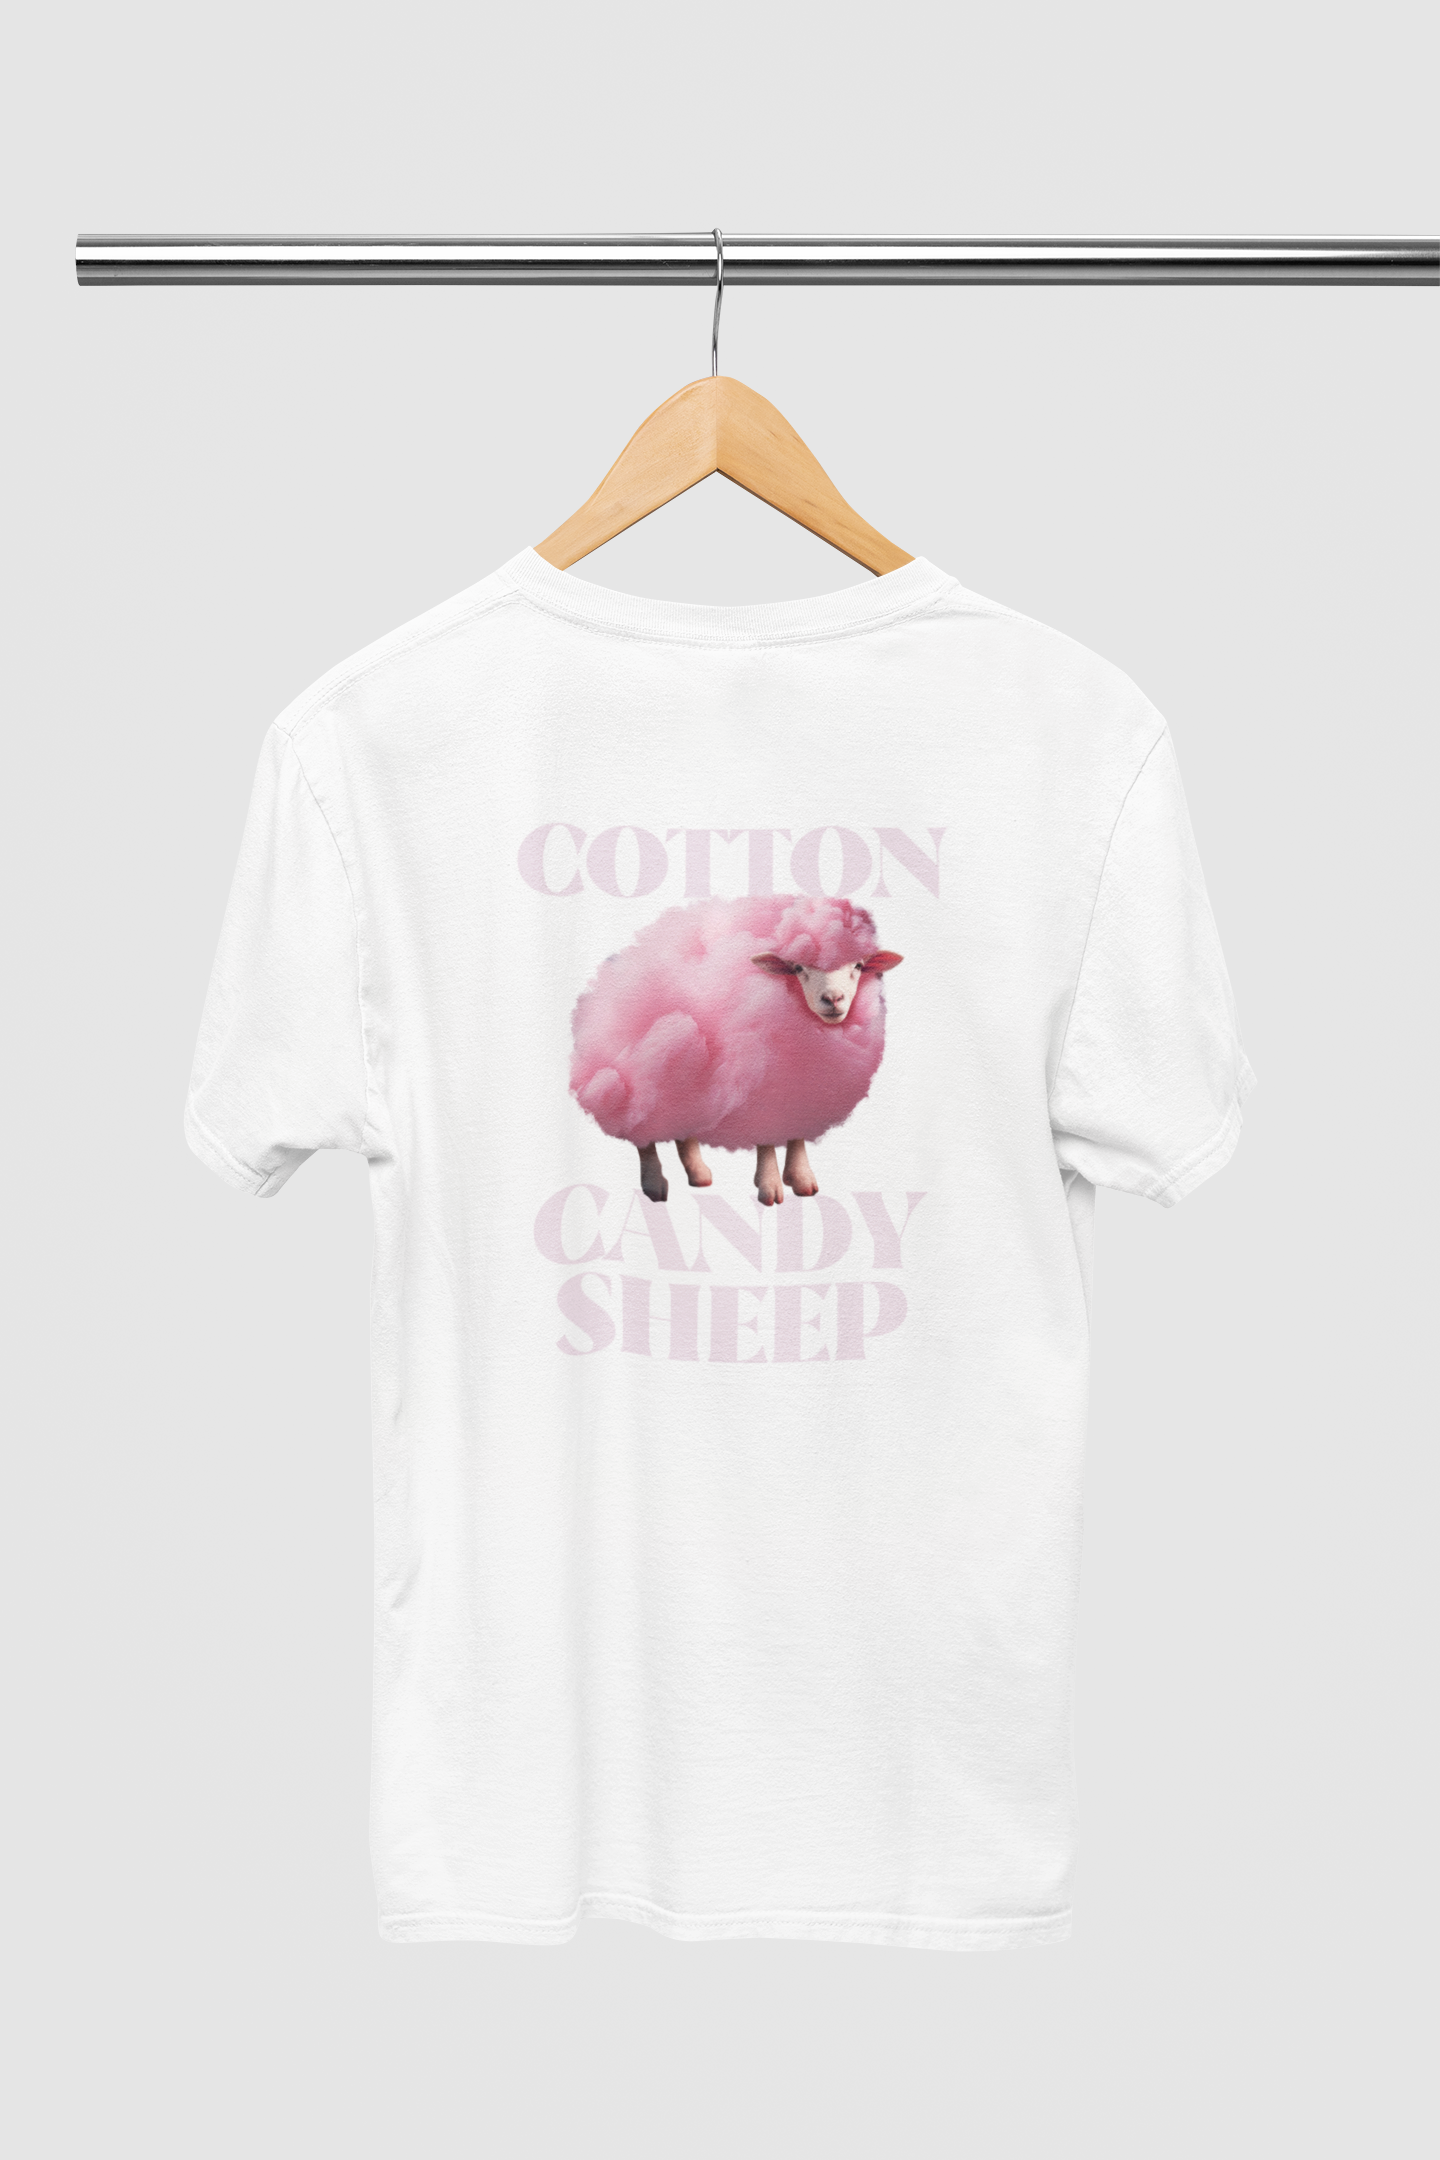 Cotton Candy Sheep T-Shirt